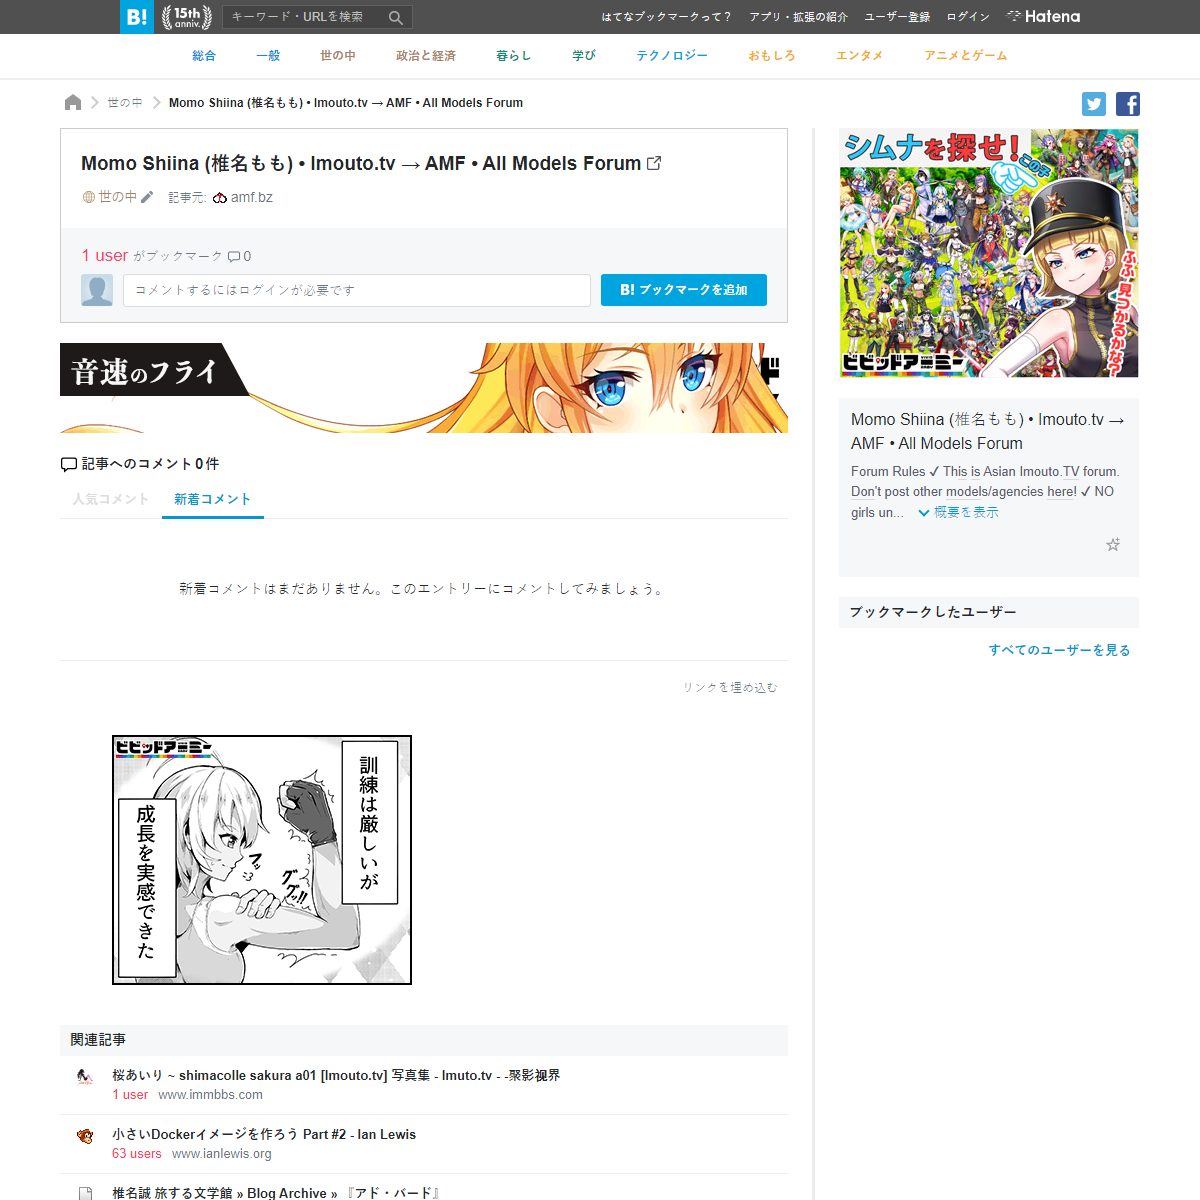 A complete backup of https://b.hatena.ne.jp/entry/amf.bz/imouto/momo-shiina-t17936.html